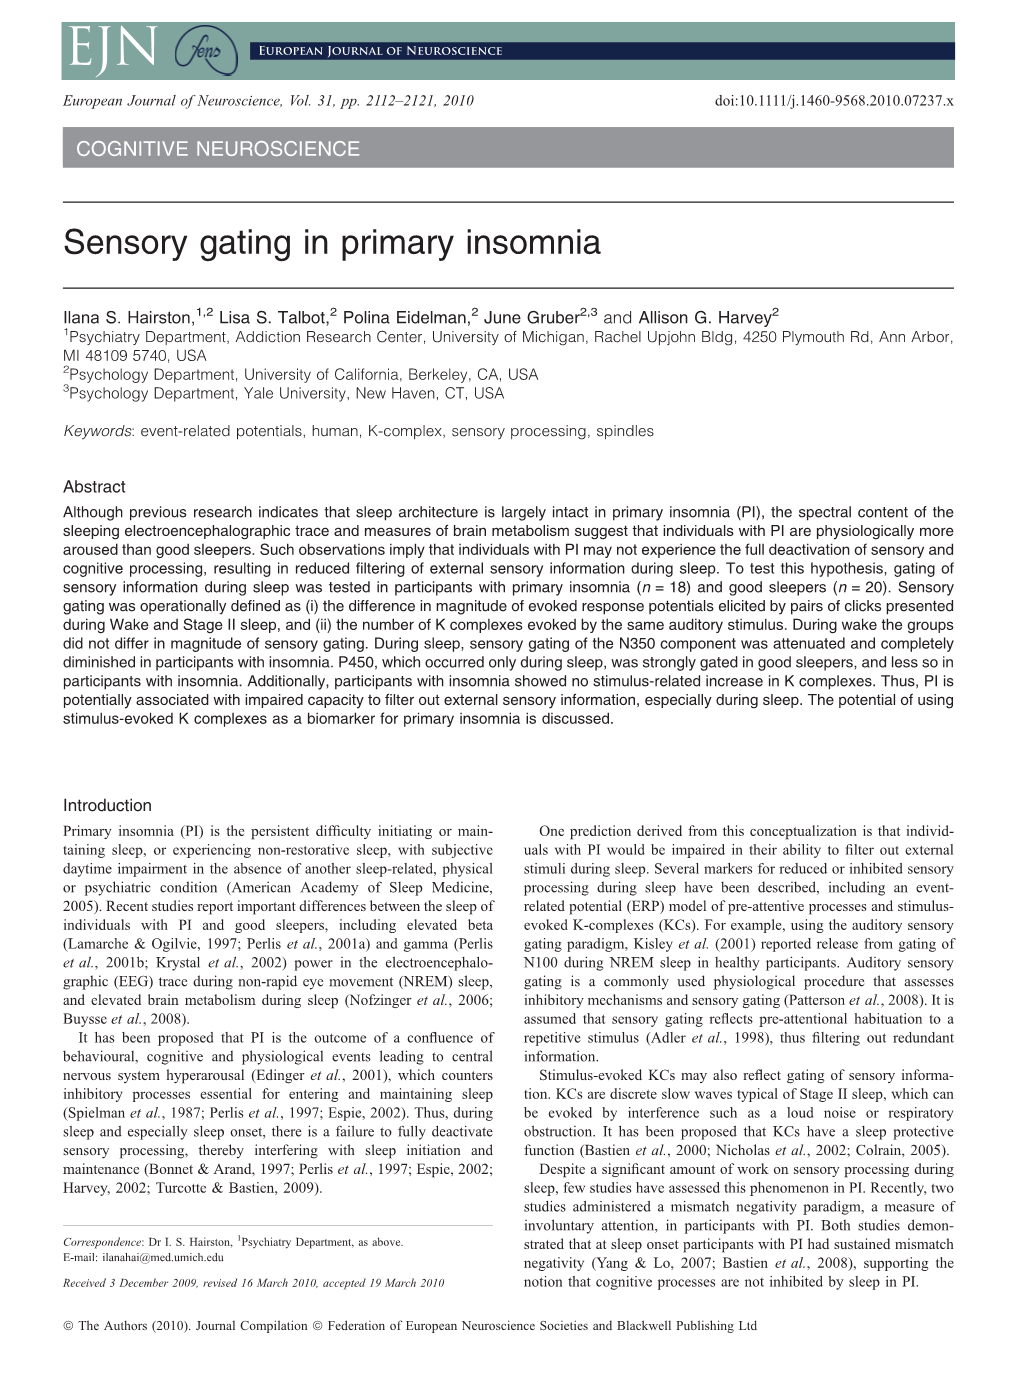 Sensory Gating in Primary Insomnia